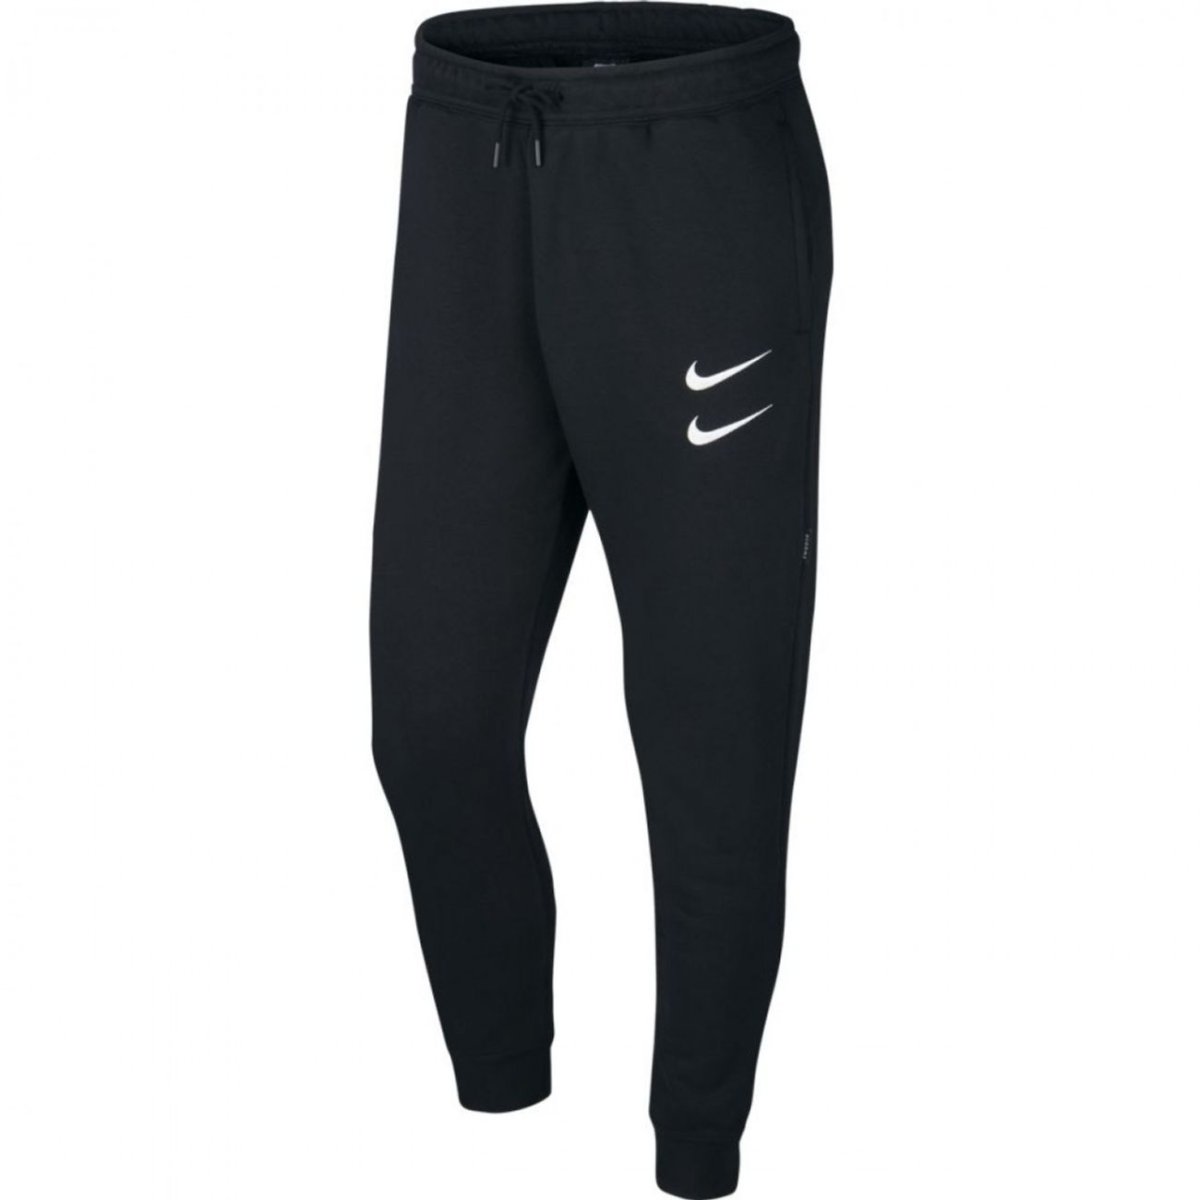 Nike Dry Academy 18 штаны